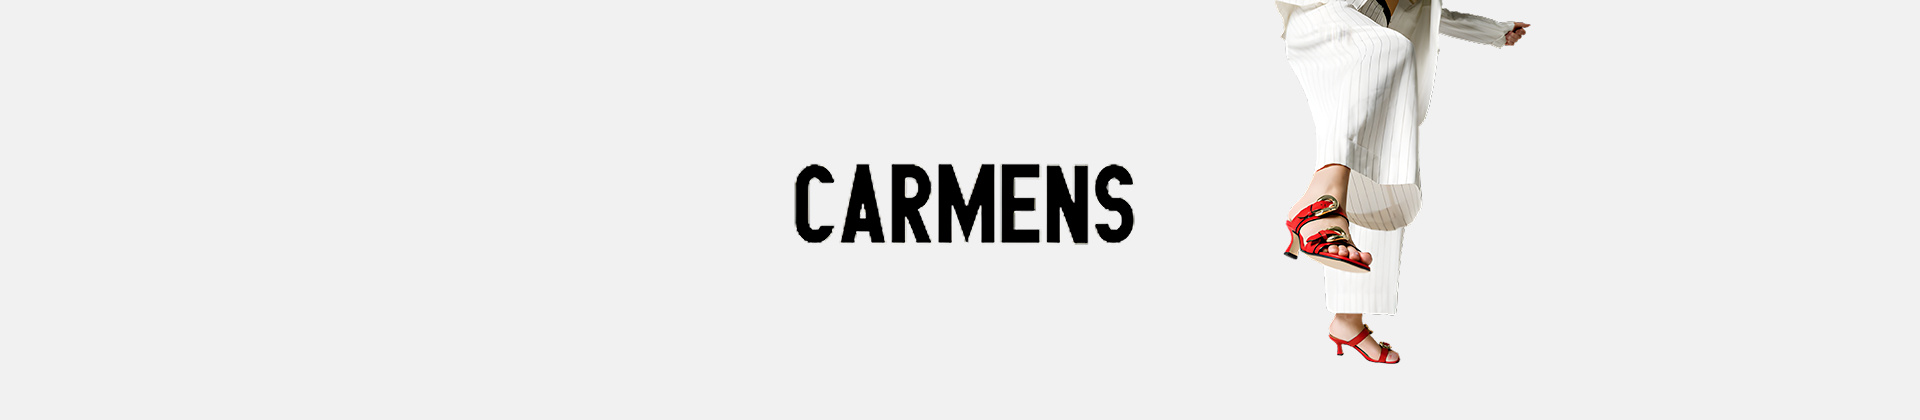 Carmens scarpe donna online